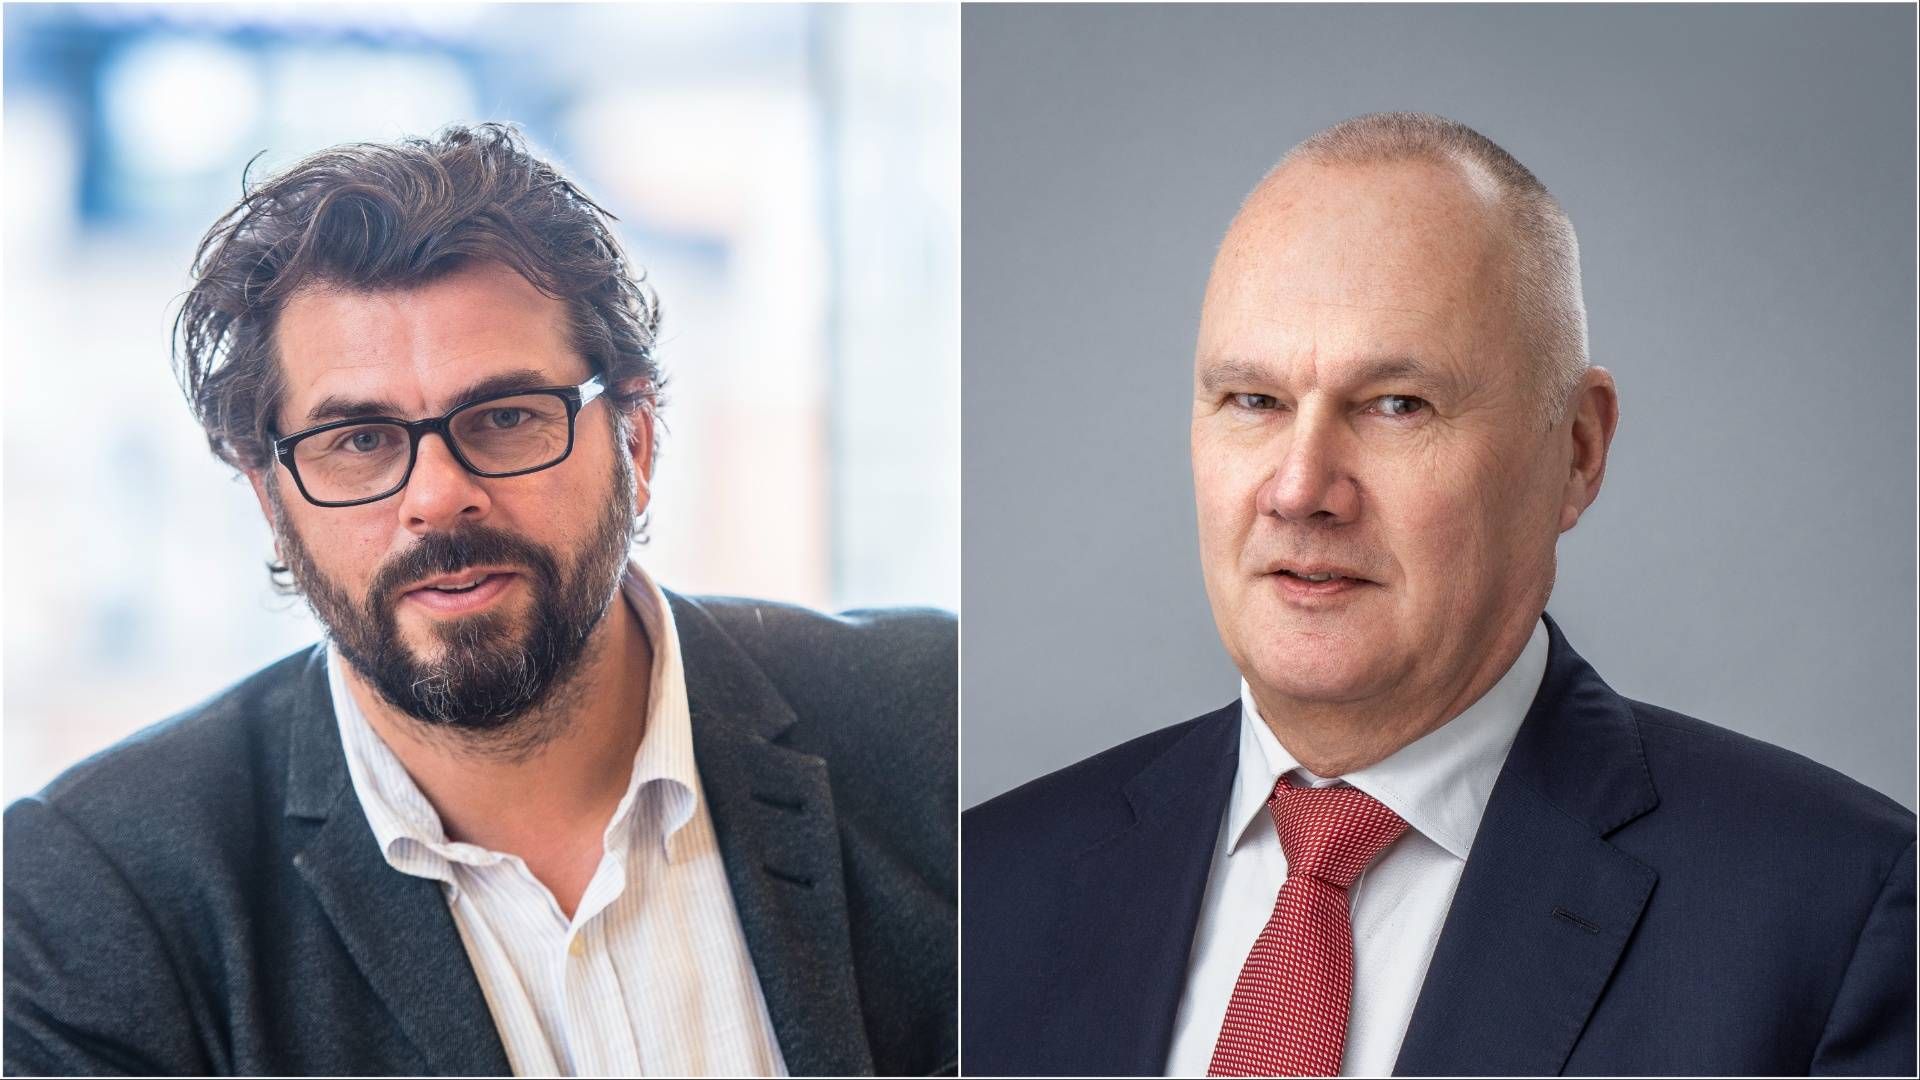 Fredrik Nordström of the Swedish Investment Fund Association (left) has voiced criticism against the FTN procurement led by executive director Erik Fransson (right). | Photo: Fondbolagens Förening / Fondtorgsnämnden / PR